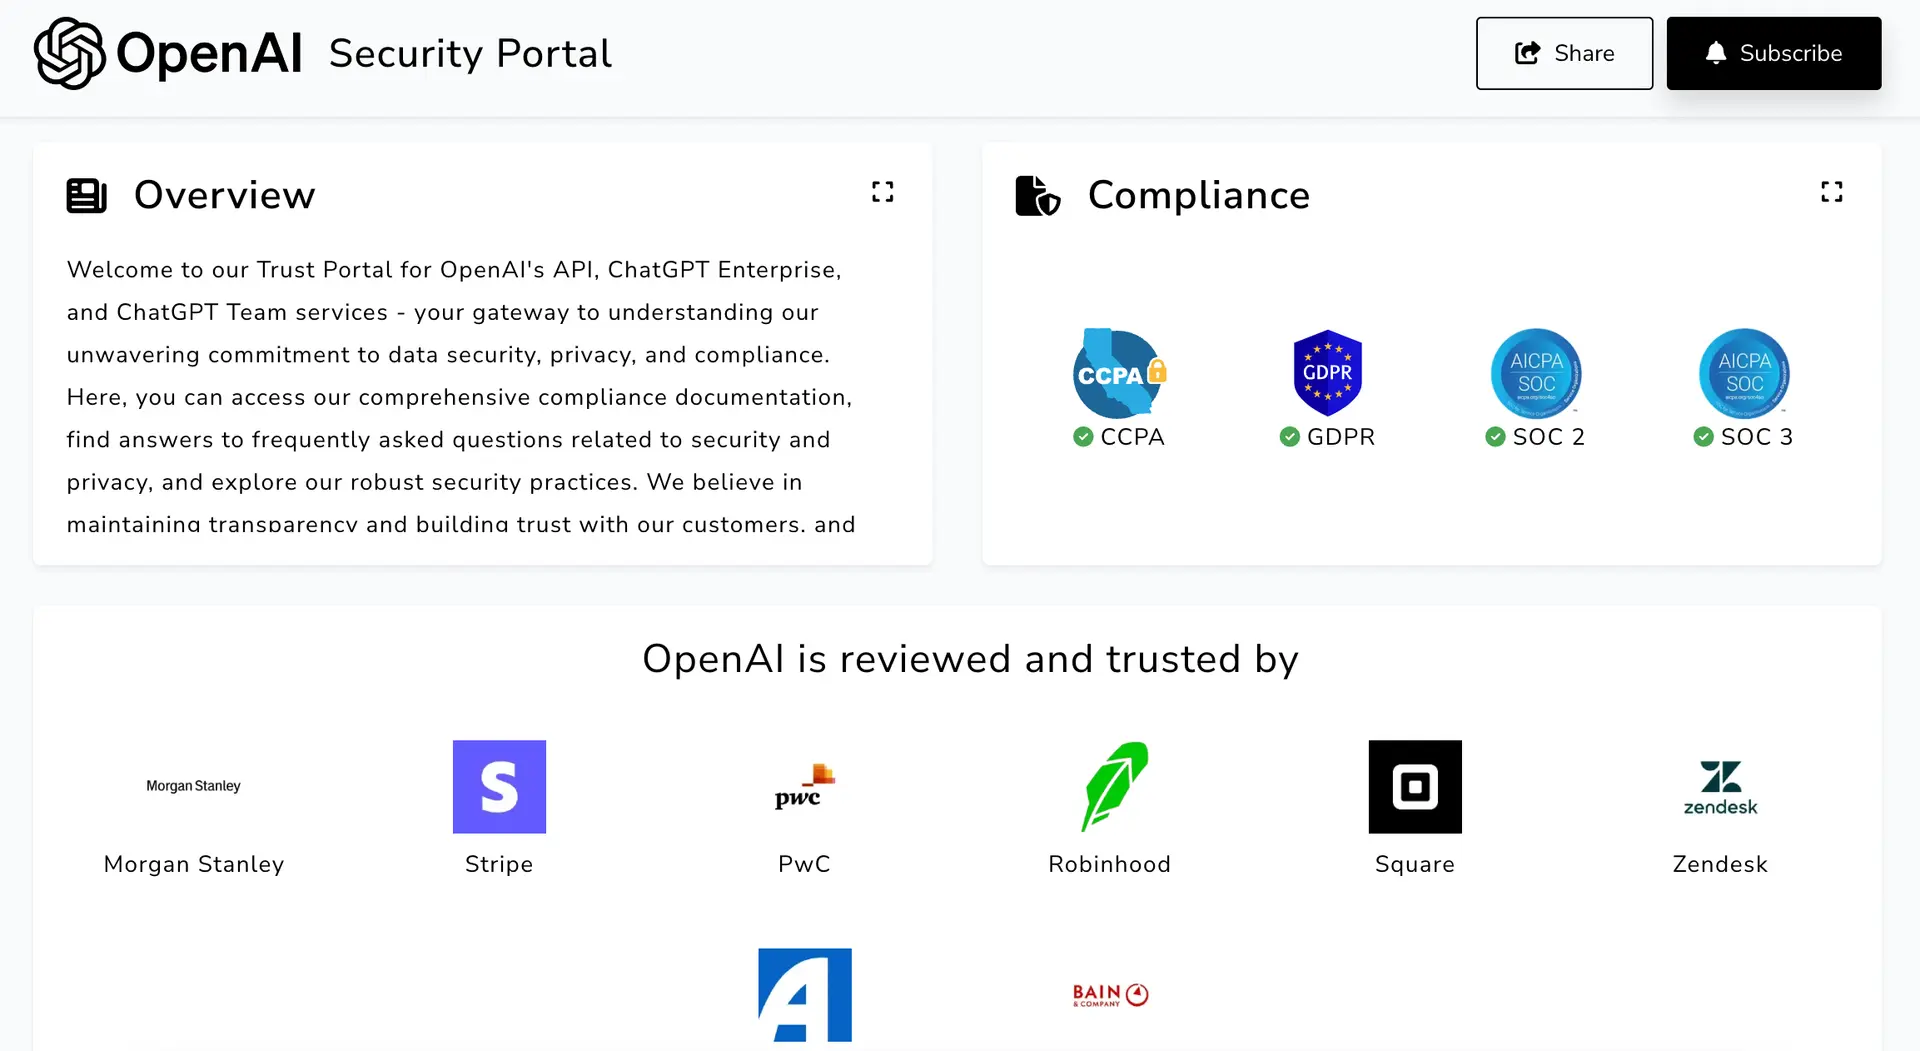 OpenAI Security Portal